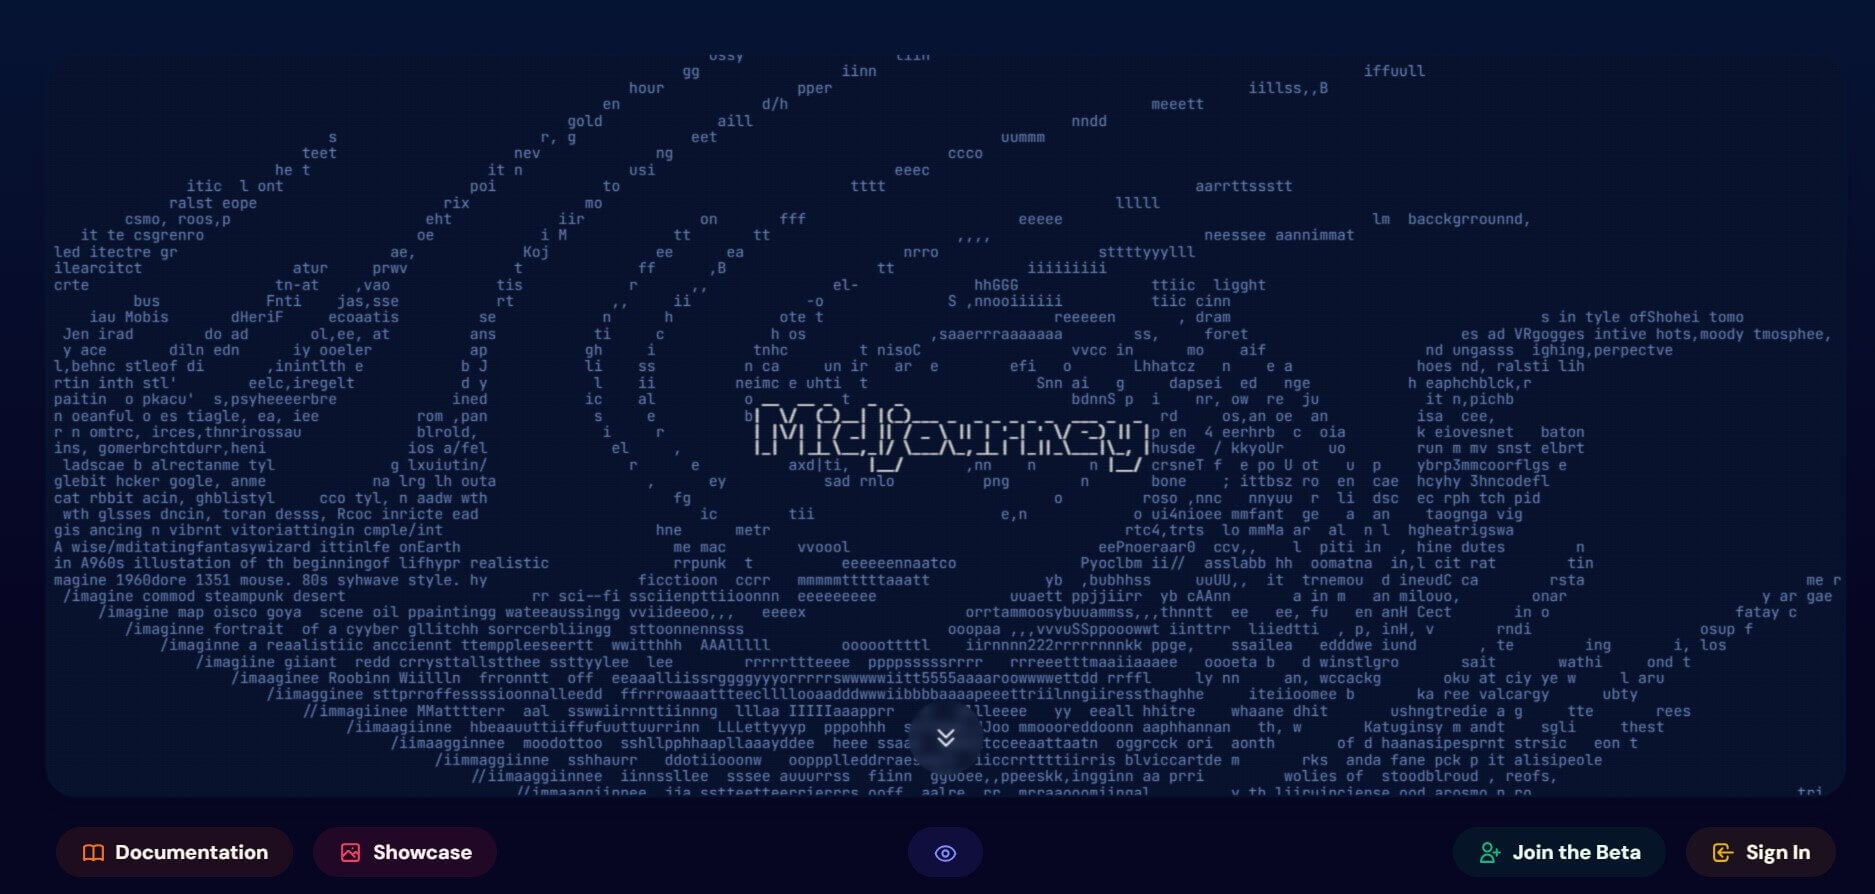 Midjourney AI home page